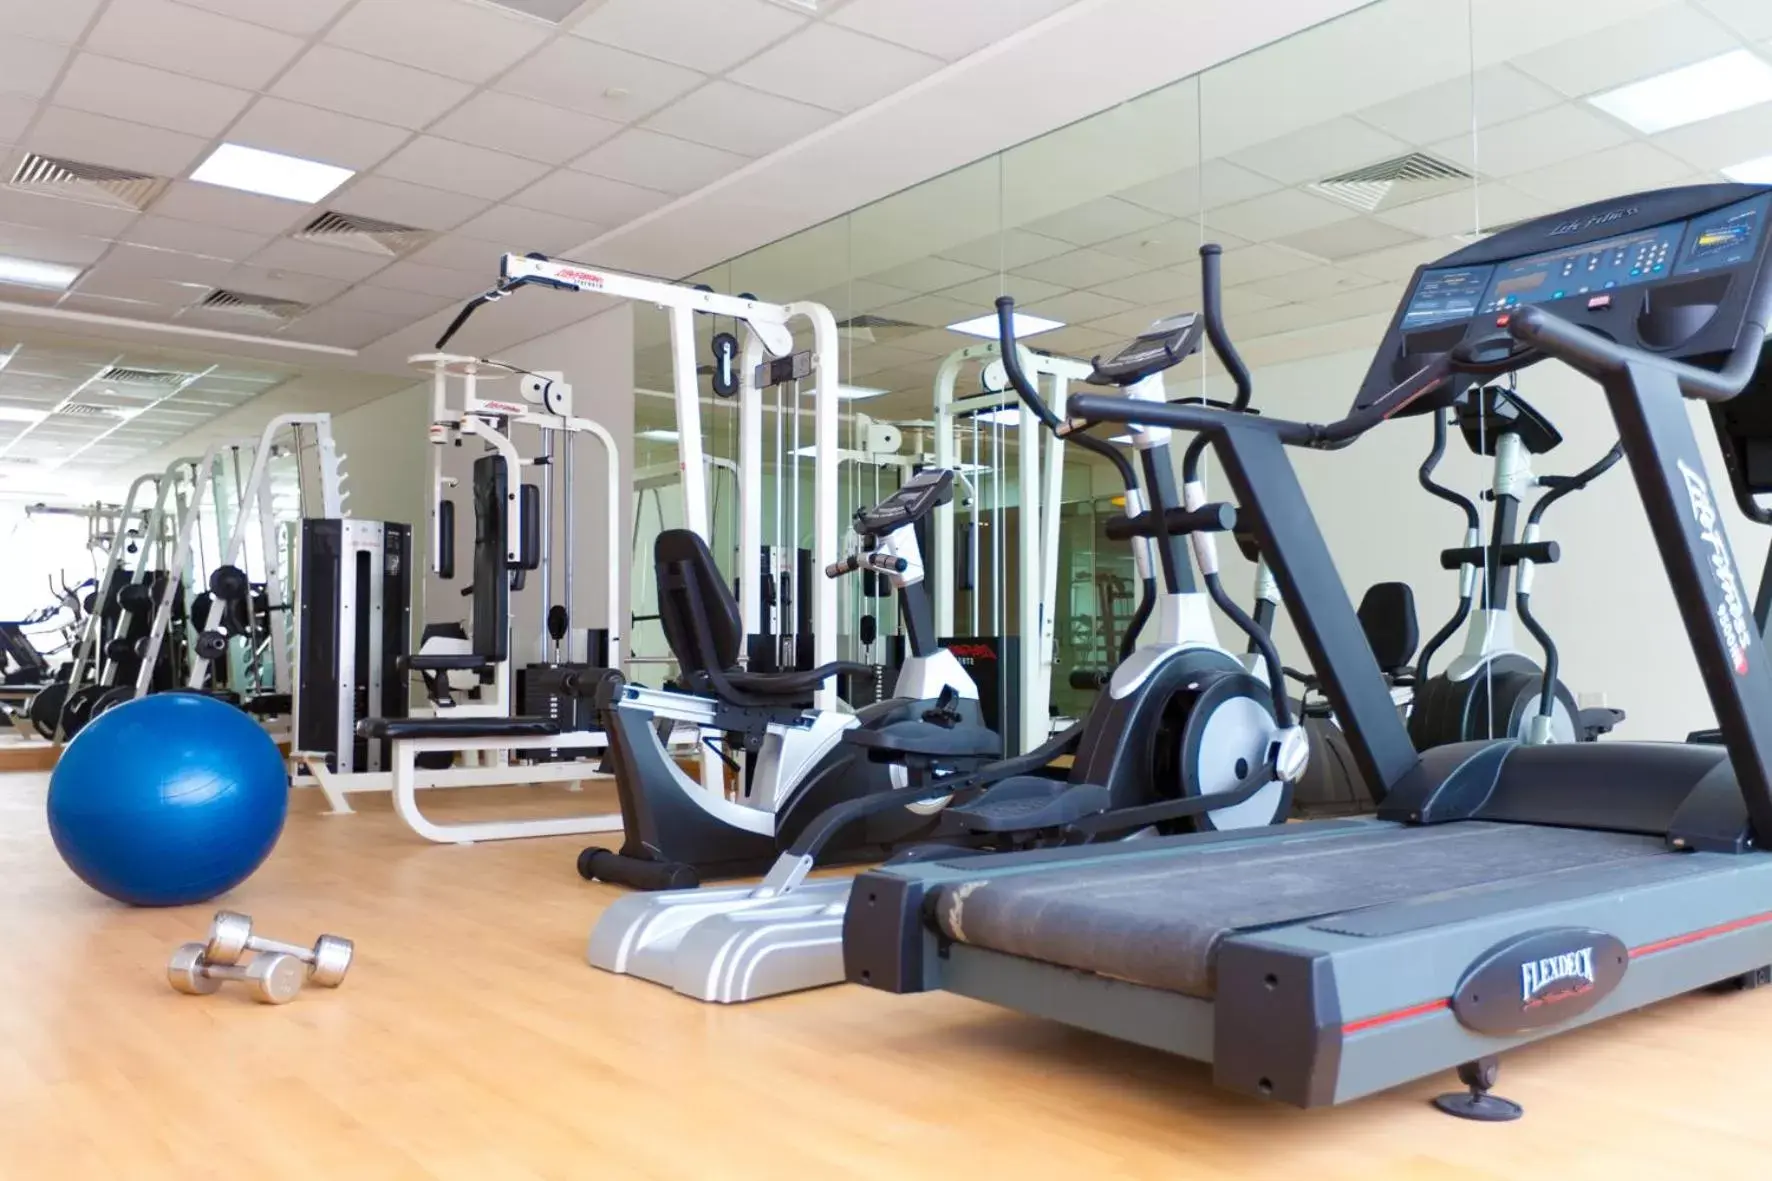 Fitness centre/facilities, Fitness Center/Facilities in Marina Byblos Hotel